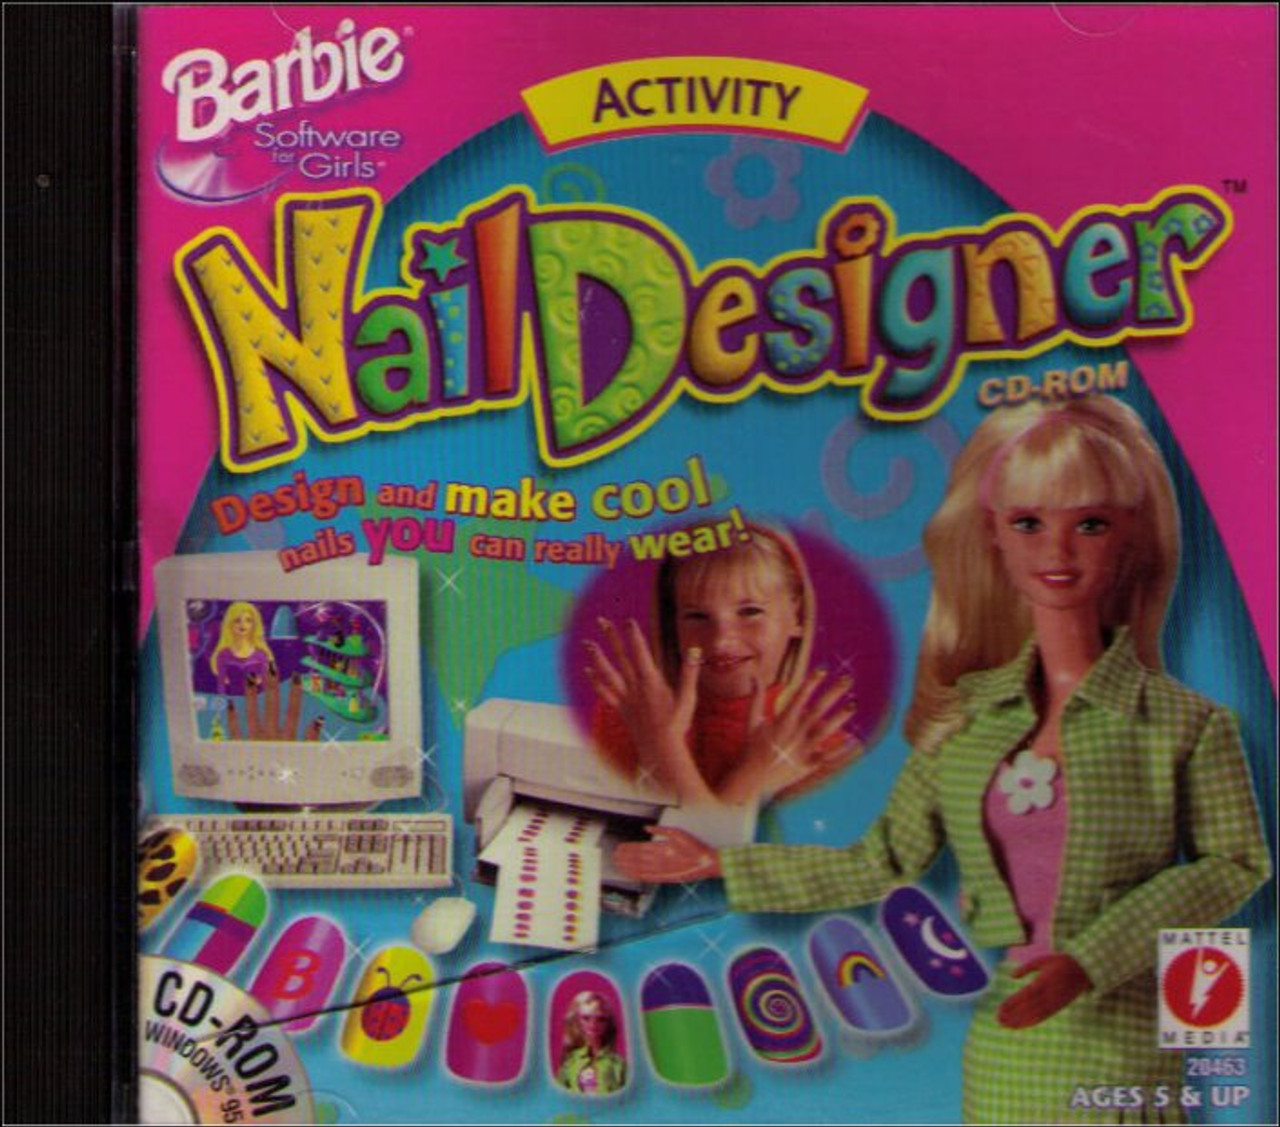 barbie nail designer